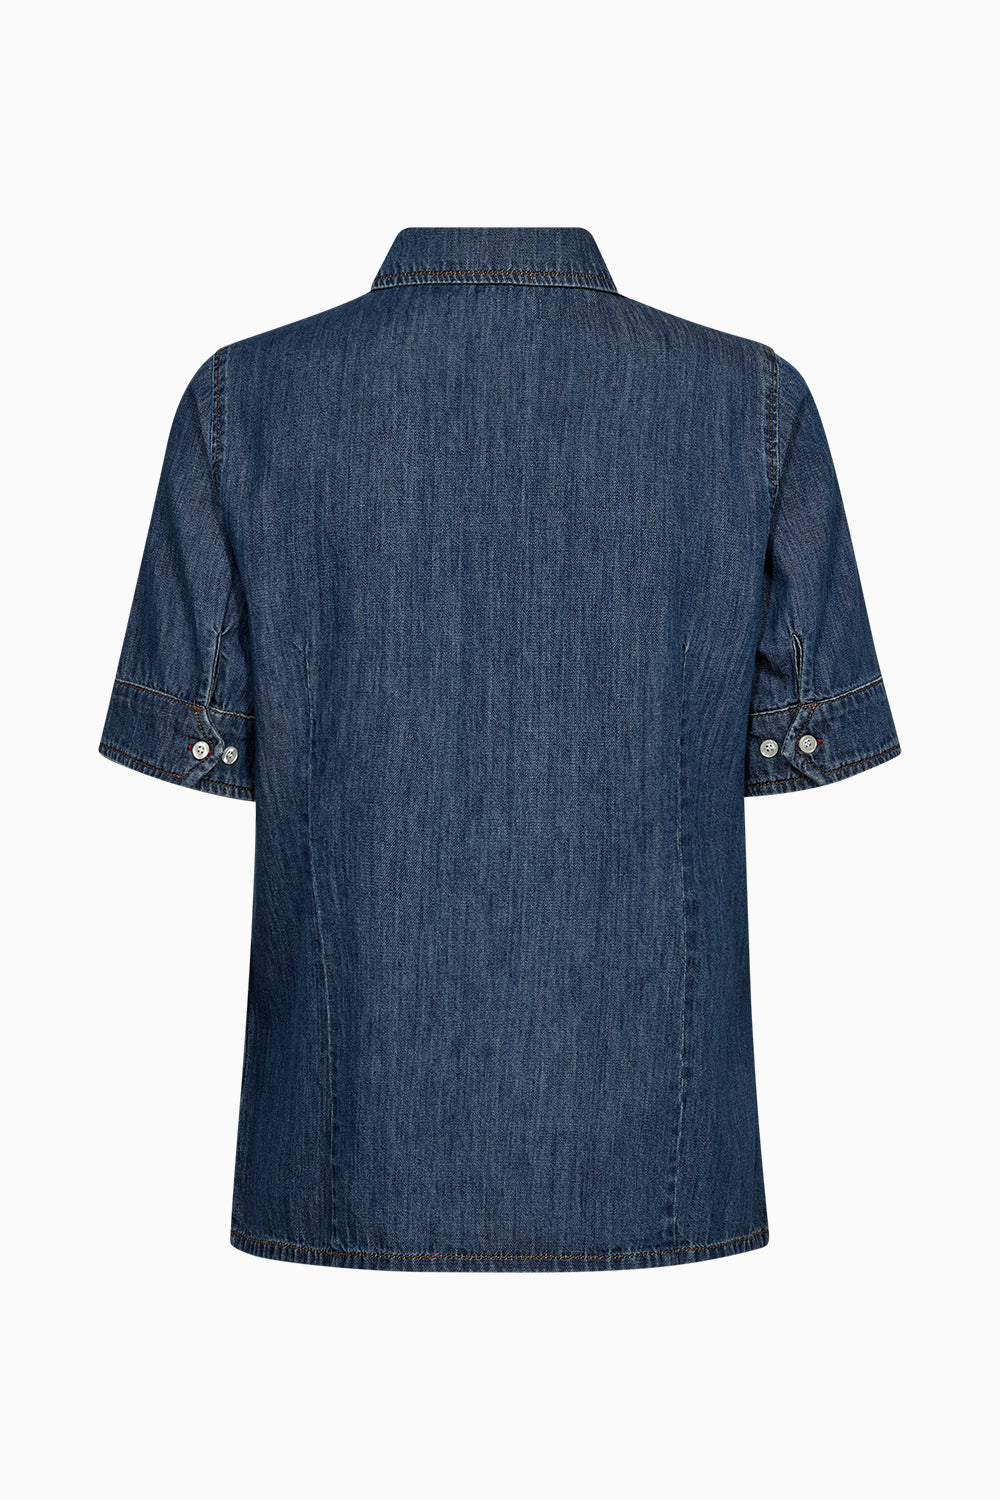 Tomorrow TRW-Amber 70's Shirt Mid Blue Denim Shirts & Blouses 51 Denim Blue